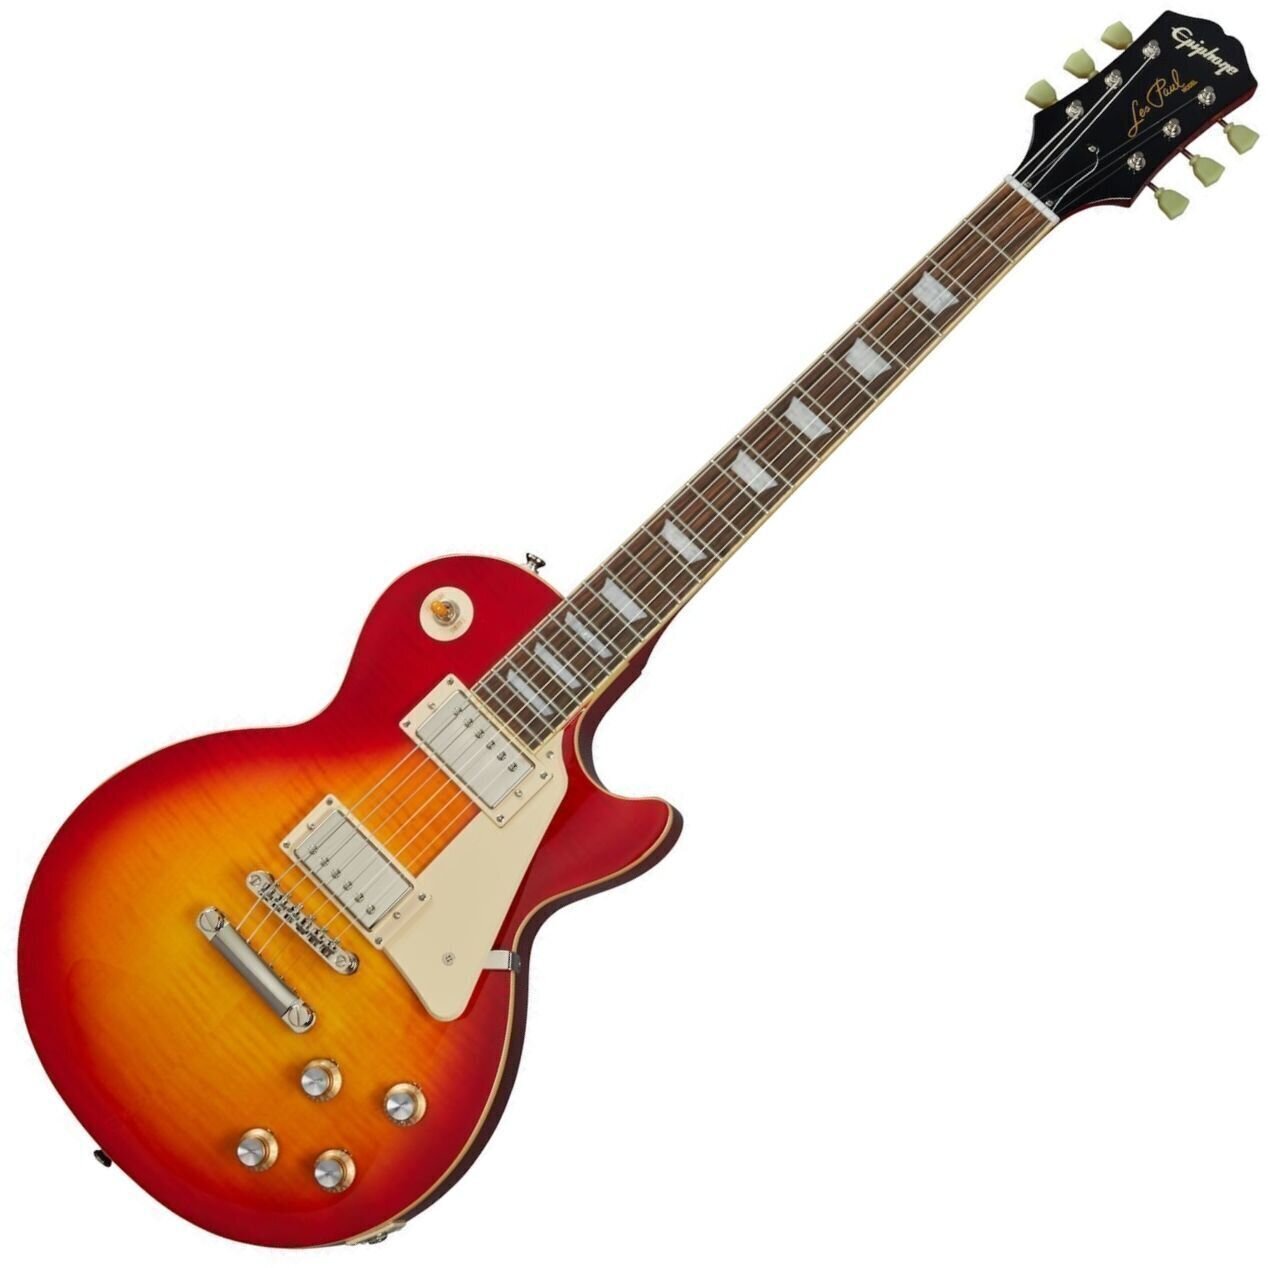 Elektrische gitaar Epiphone Joe Bonamassa 1960 Les Paul Standard Norm Burst